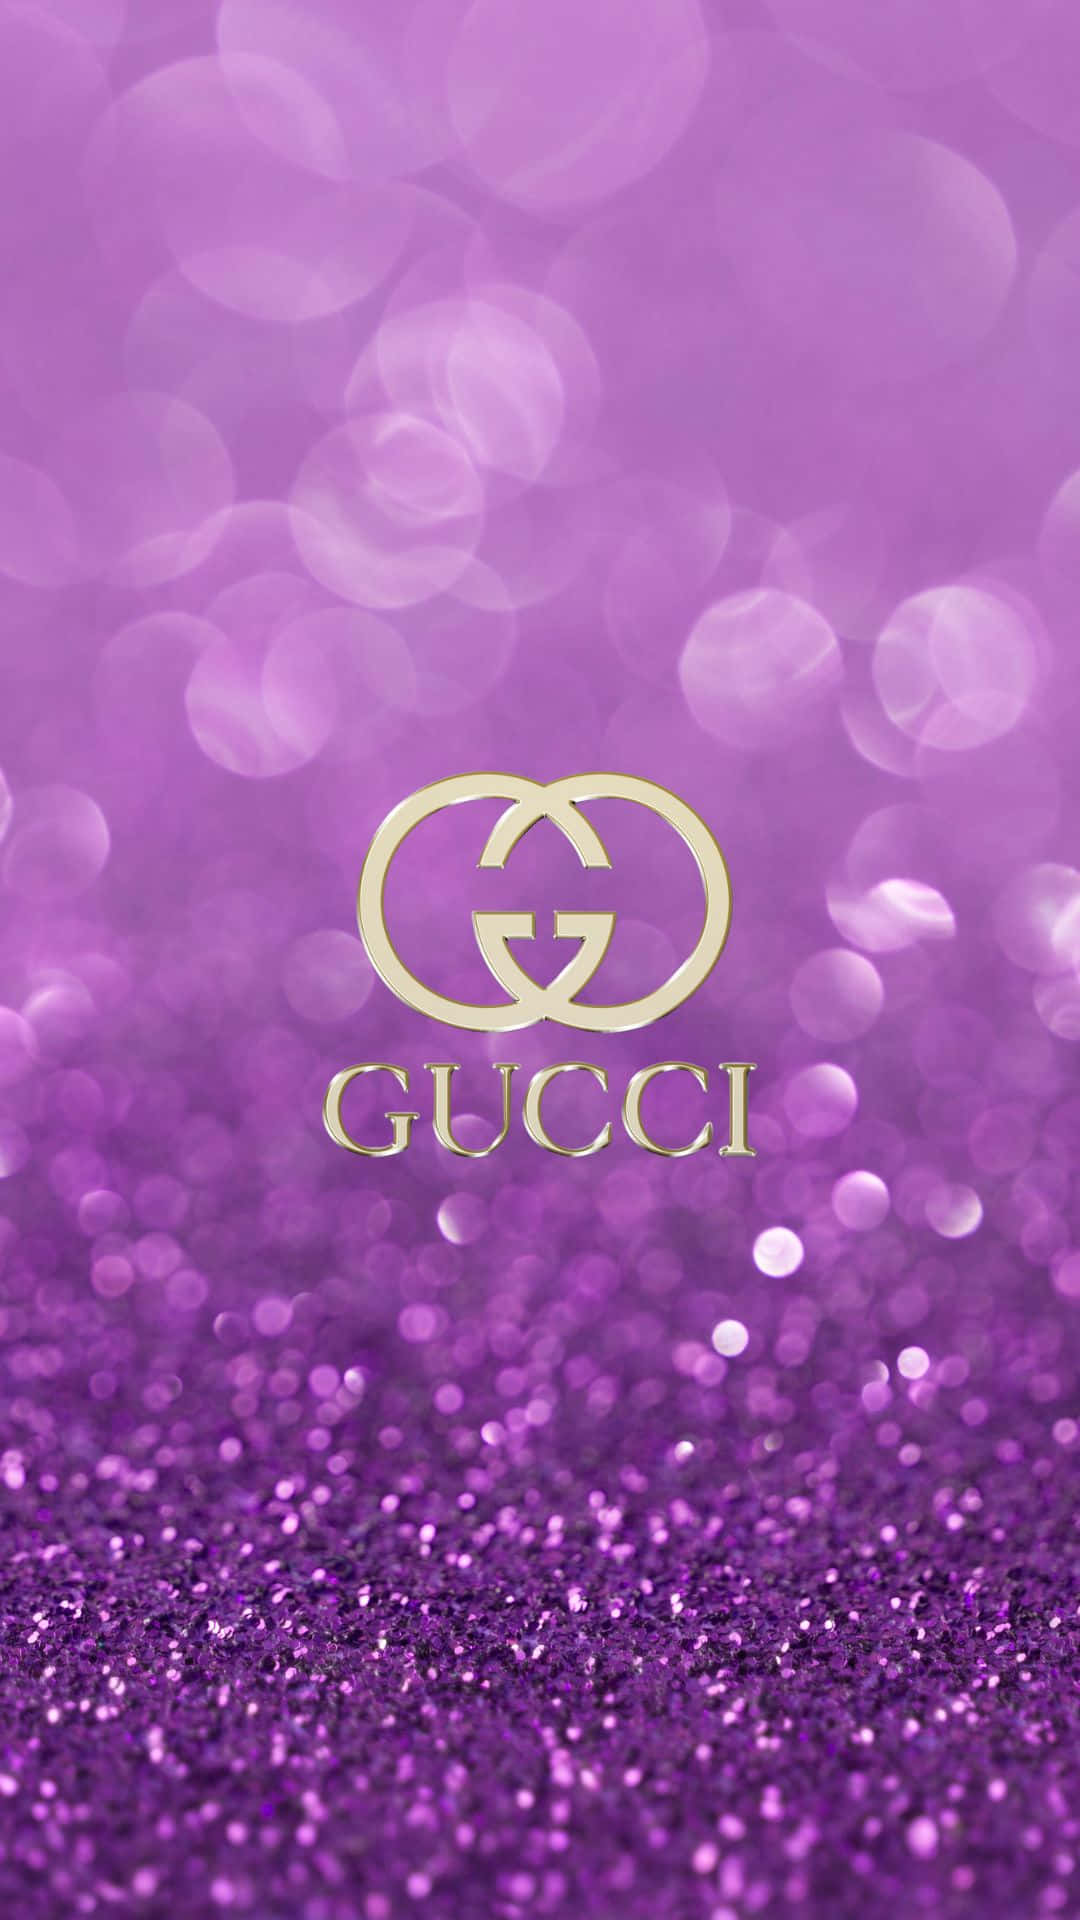 100+] Purple Gucci Backgrounds